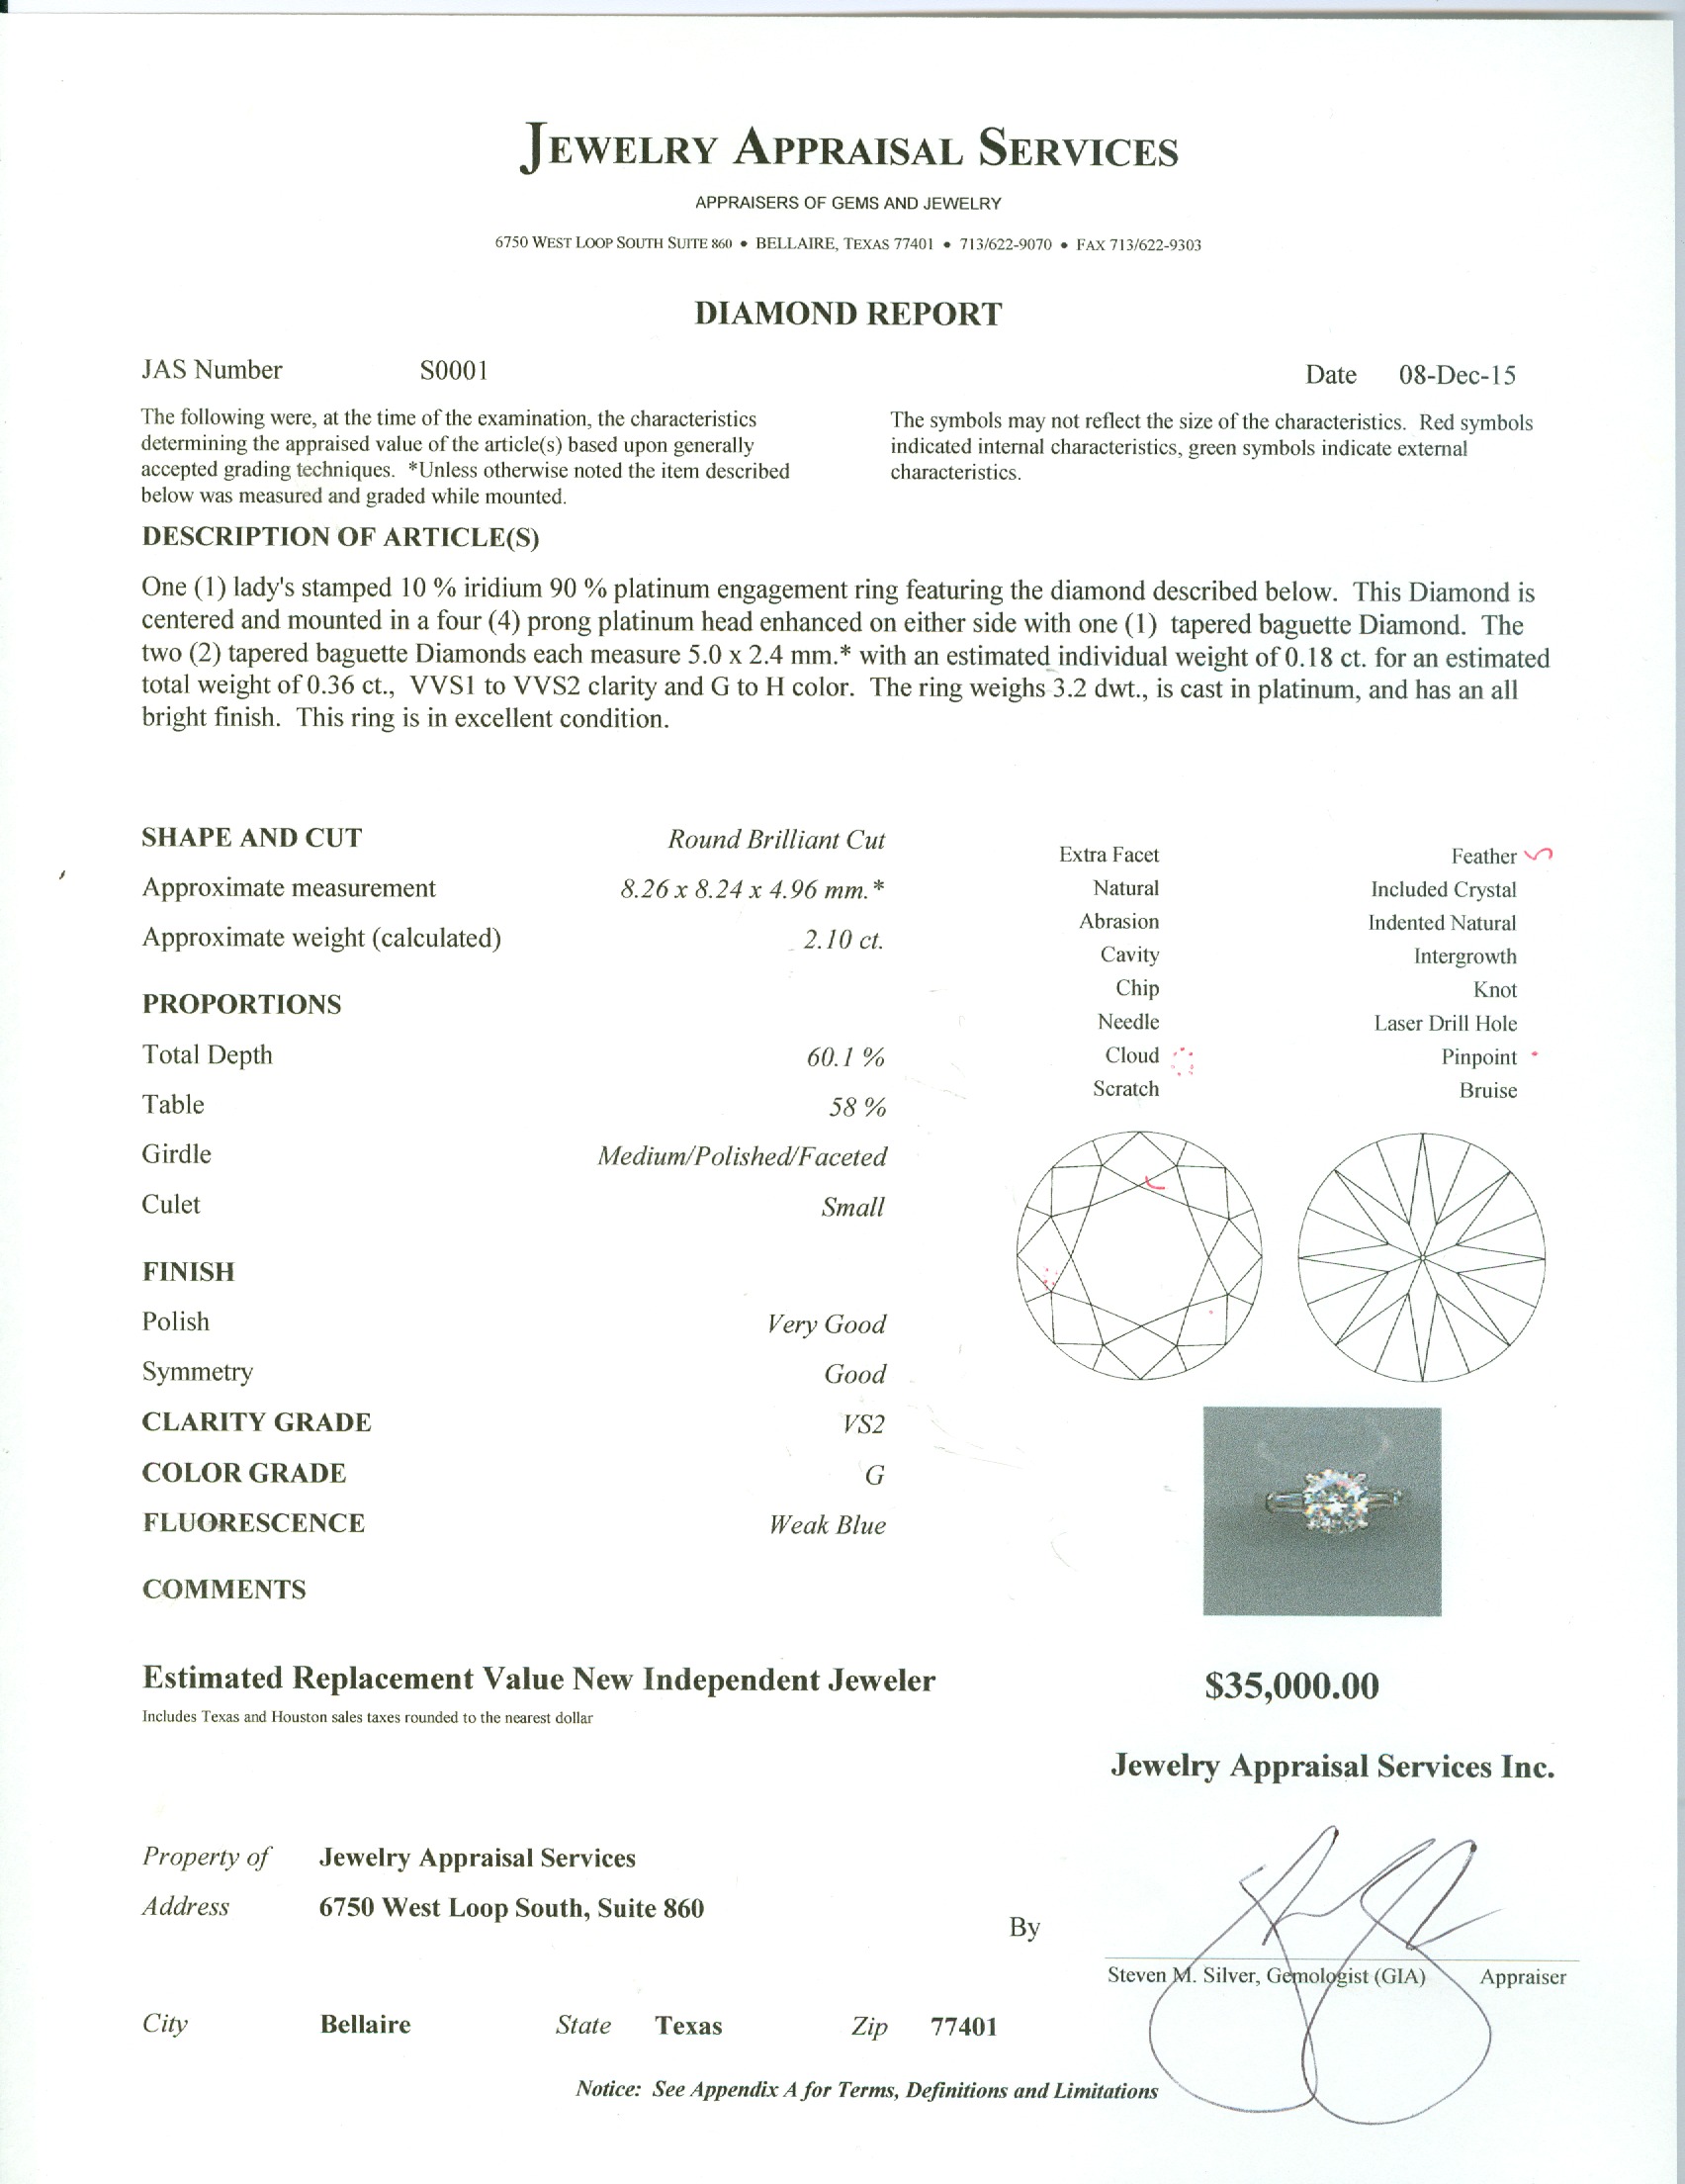 Sample Appraisal Report of Diamond